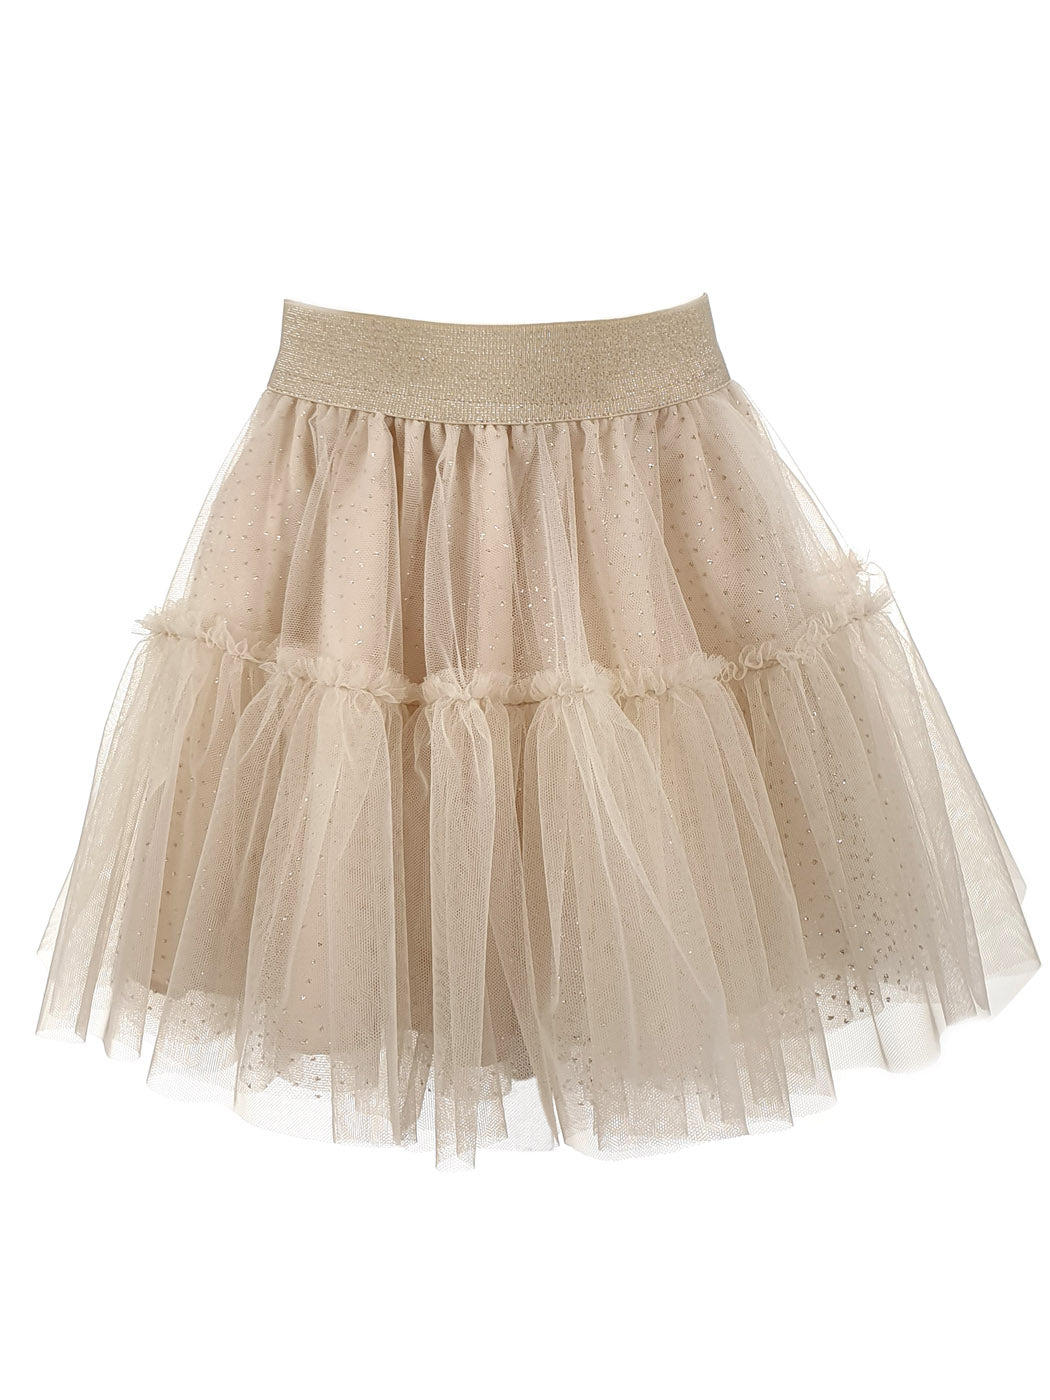 Tutu tulle skirt with ruffles - BROOKE